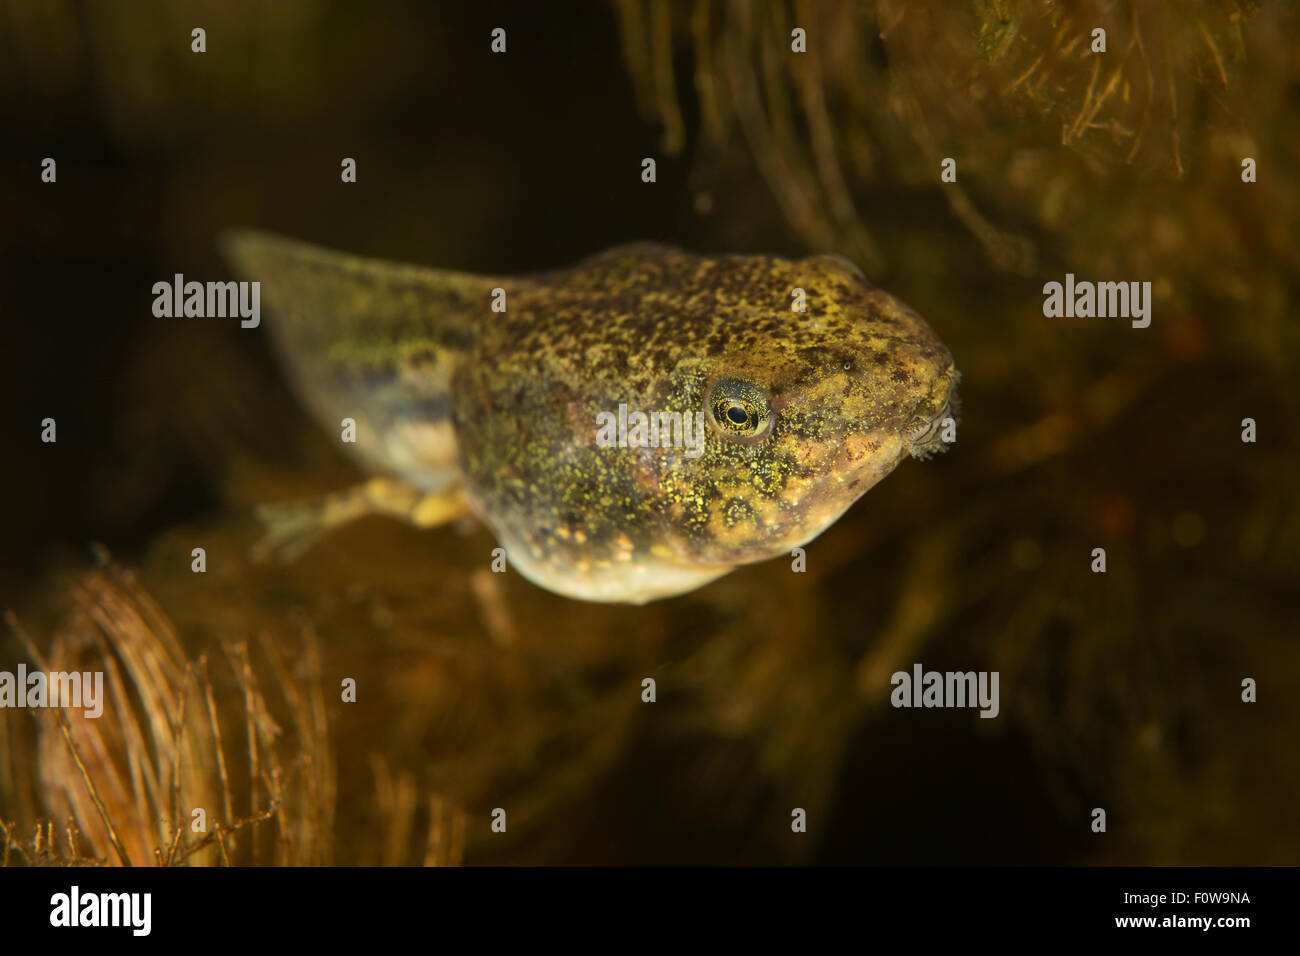 Pool frog tadpole (Pelophylax lessonae) amongst Soft hornwort (Ceratophyllum submersum), underwater, Danube Delta, Romania, June. Stock Photo